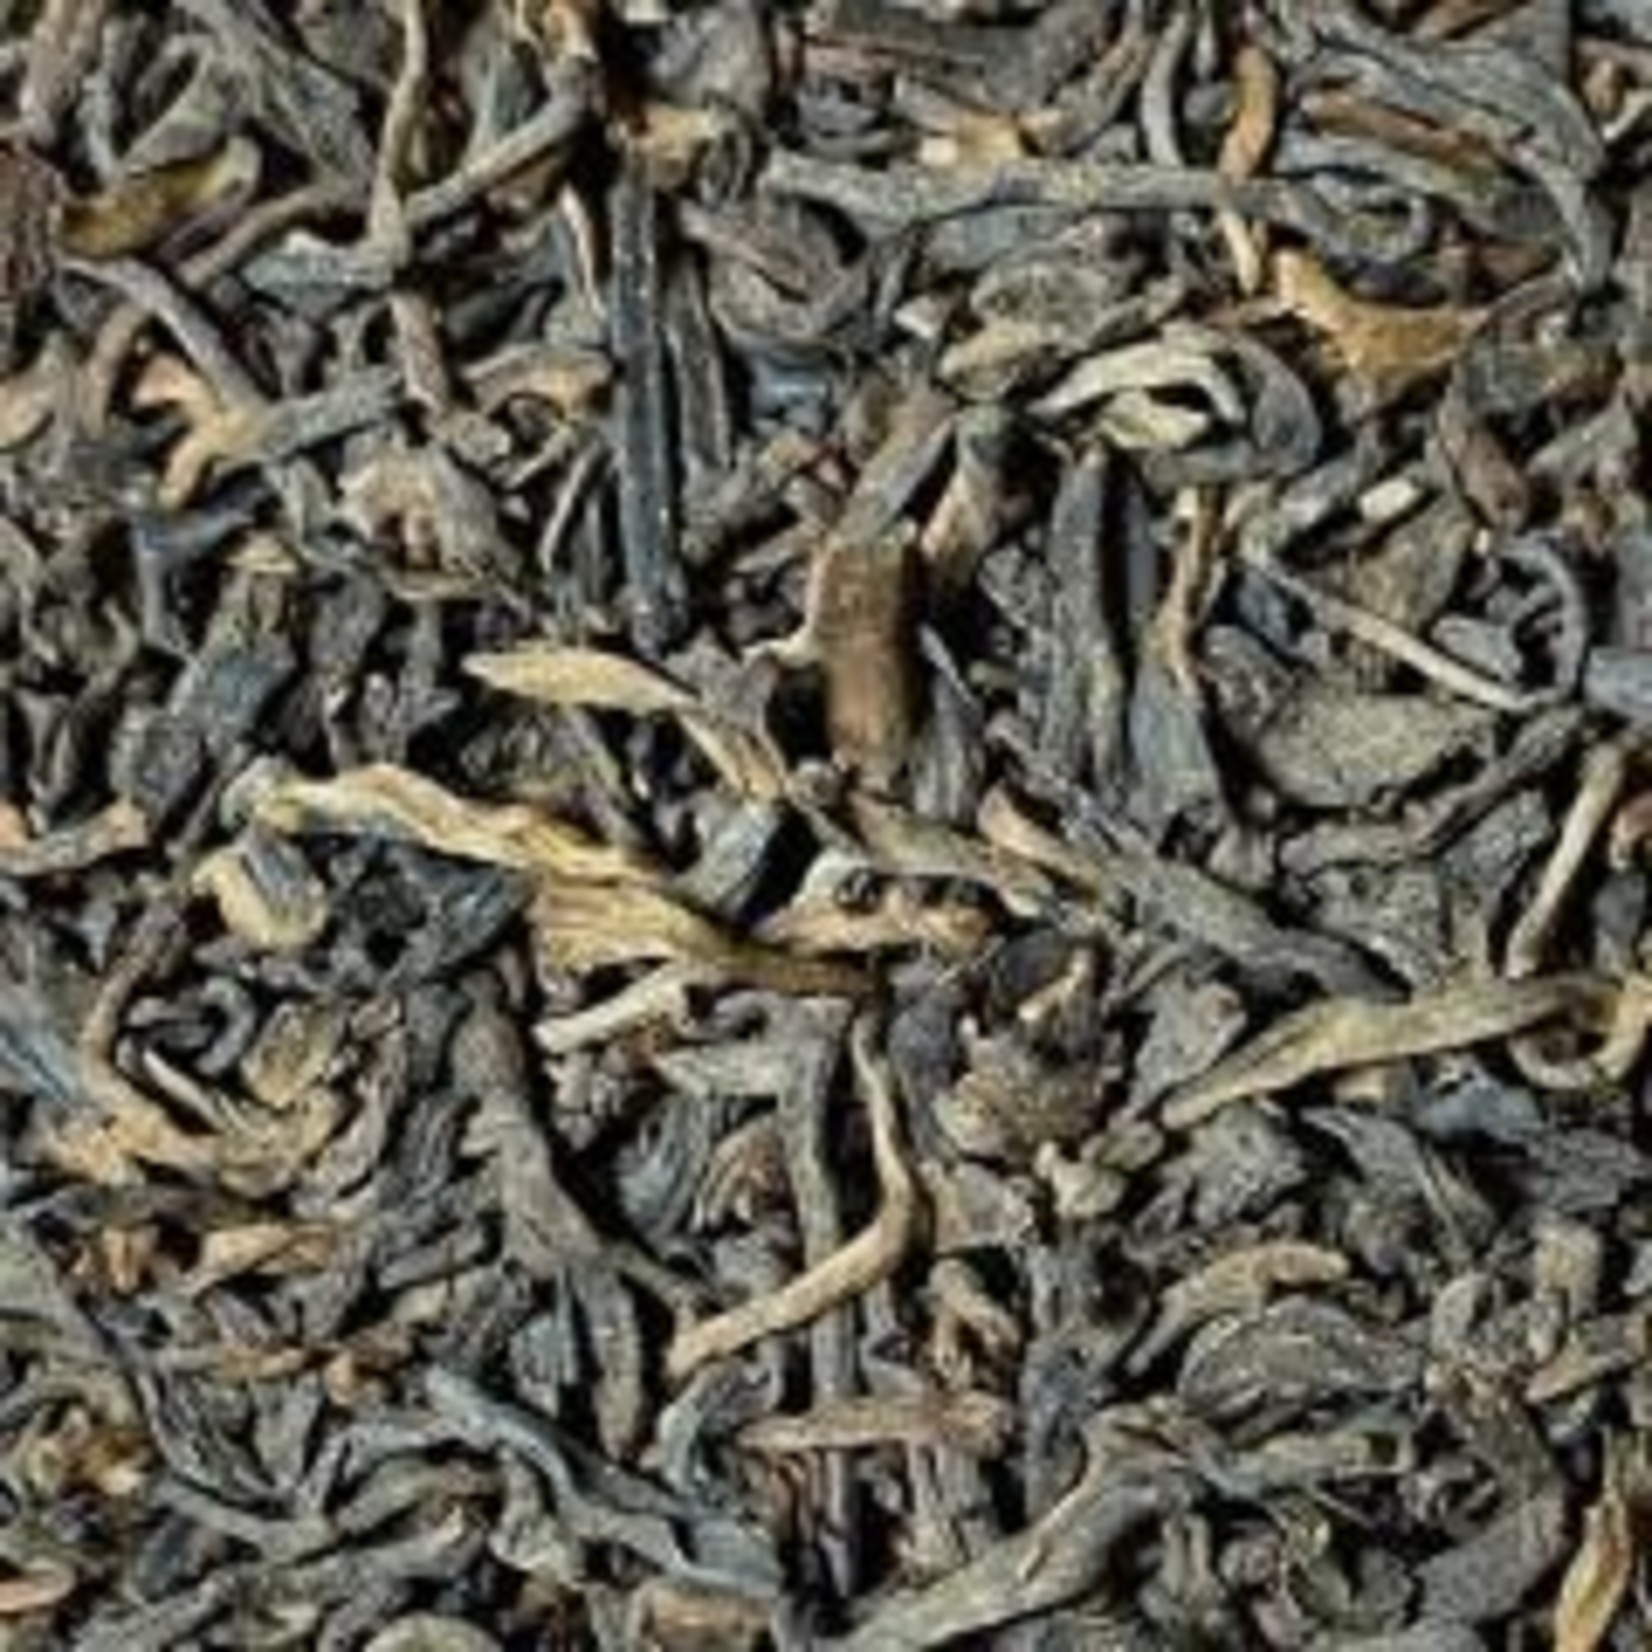 San Francisco Herb Pu-Erh Small Leaf Tea